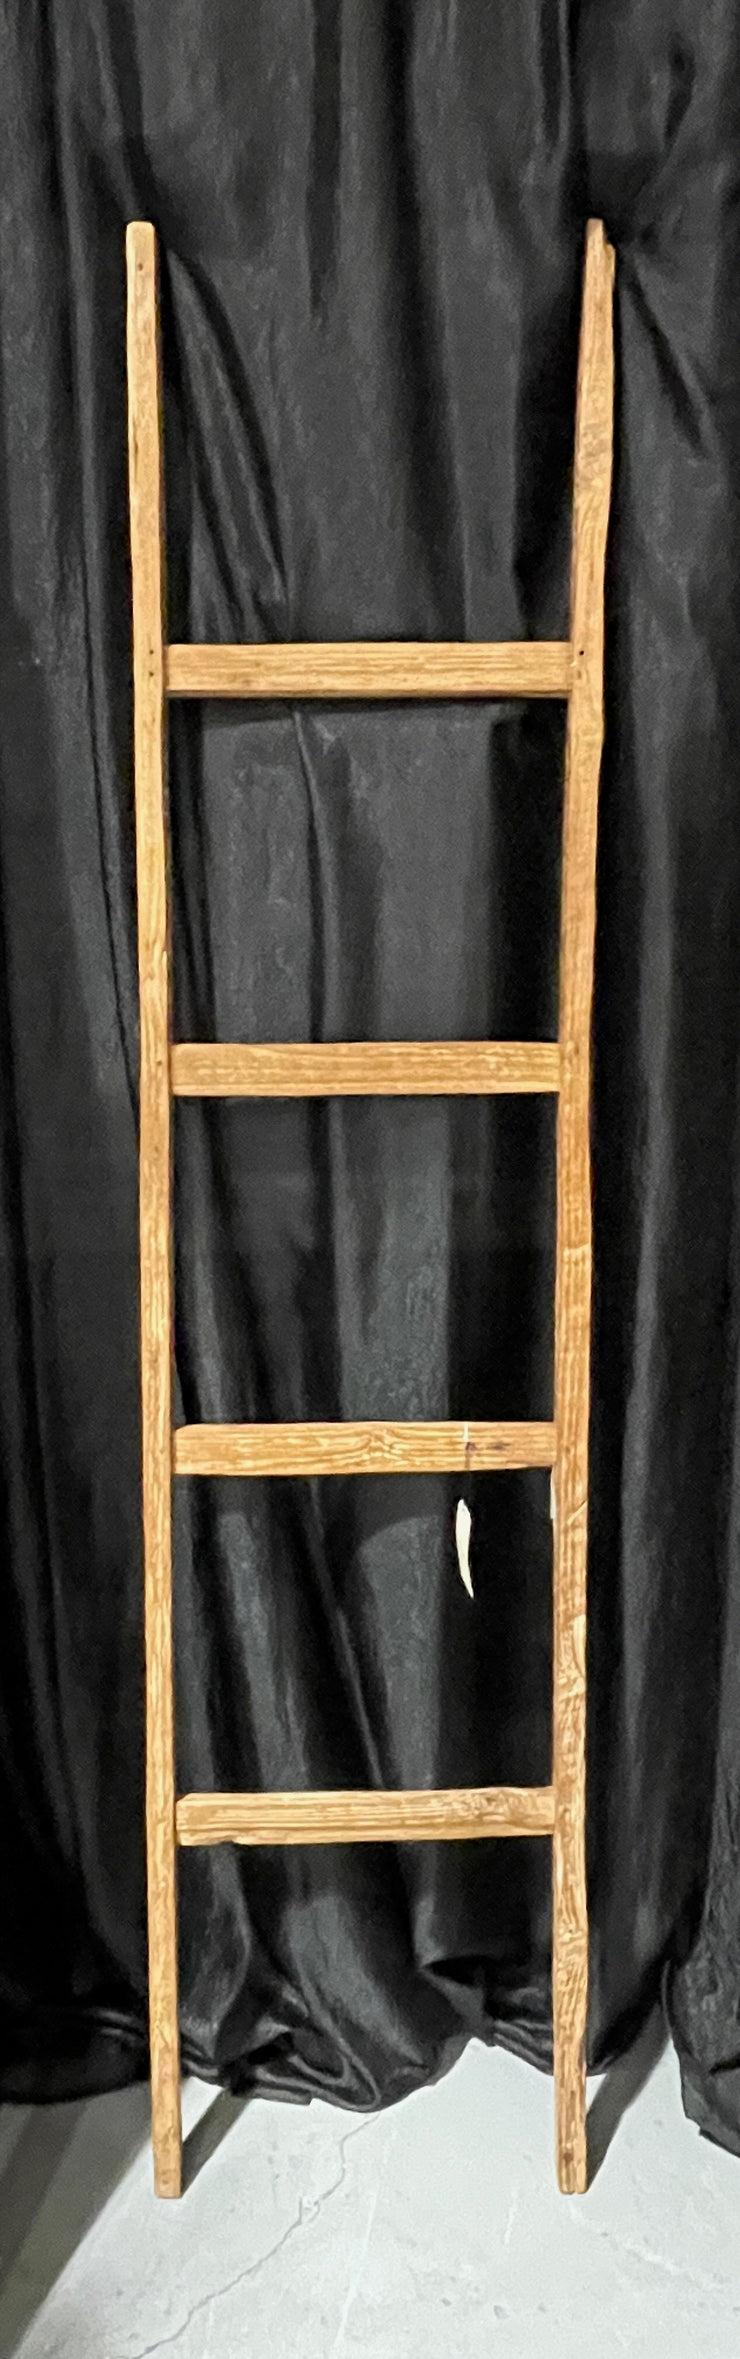 Wood Rustic Wall Hanger/Ladder